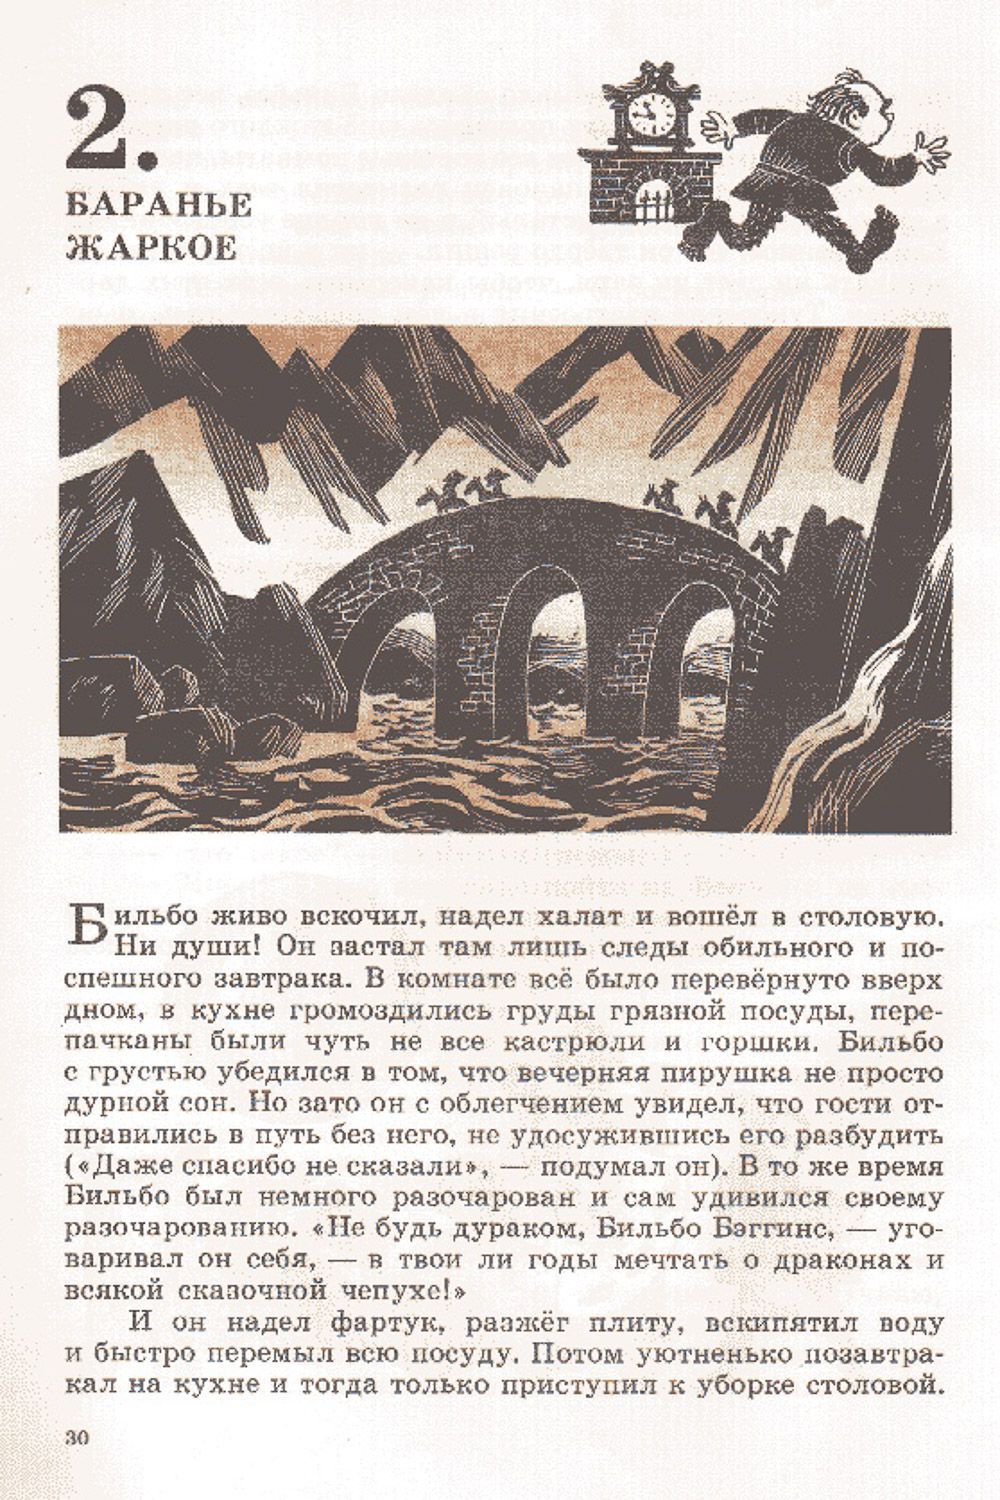 The Hobbit 1976 Soviet J. R. R. Tolkien